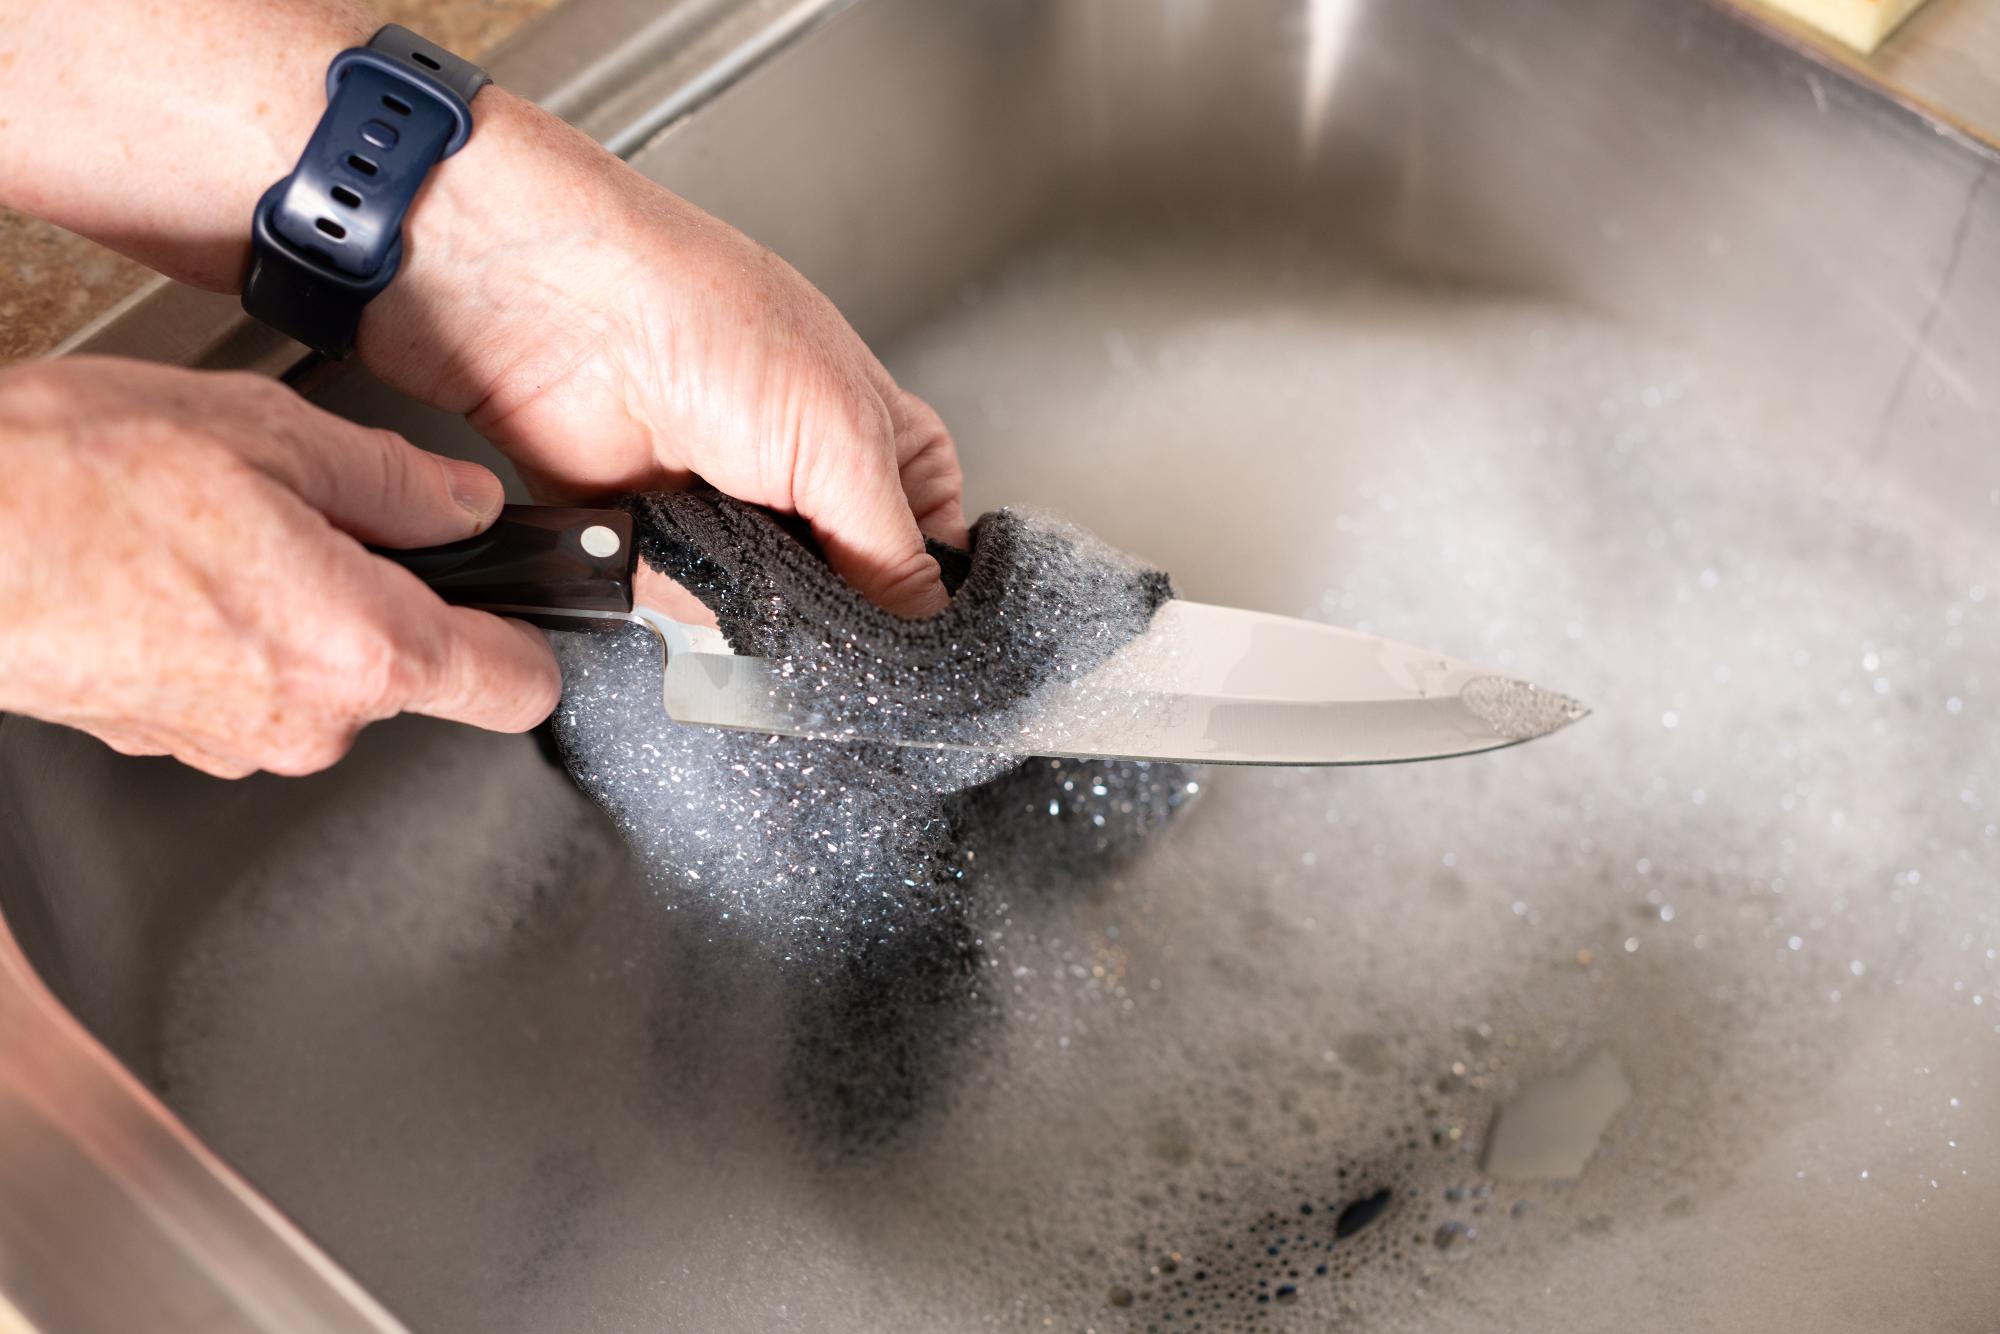 Hand washing a knife.